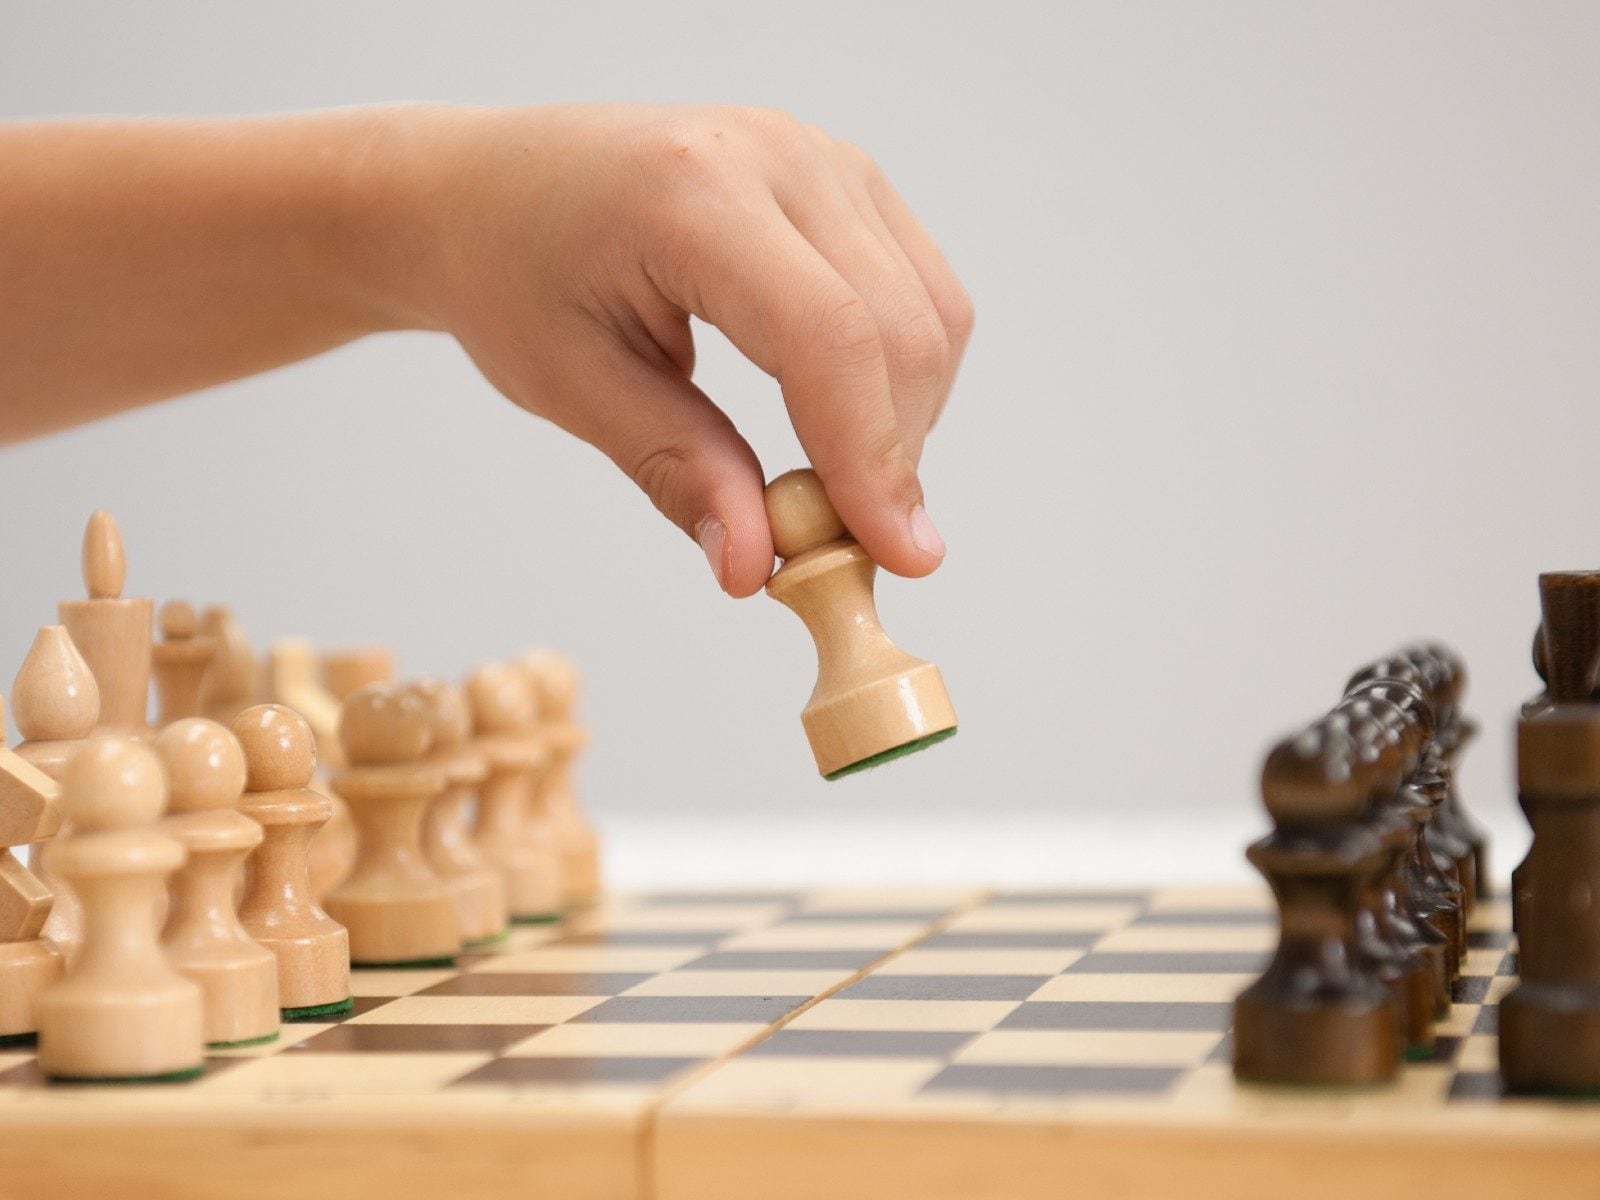 International Chess Day 2022: Many benefits of playing chess